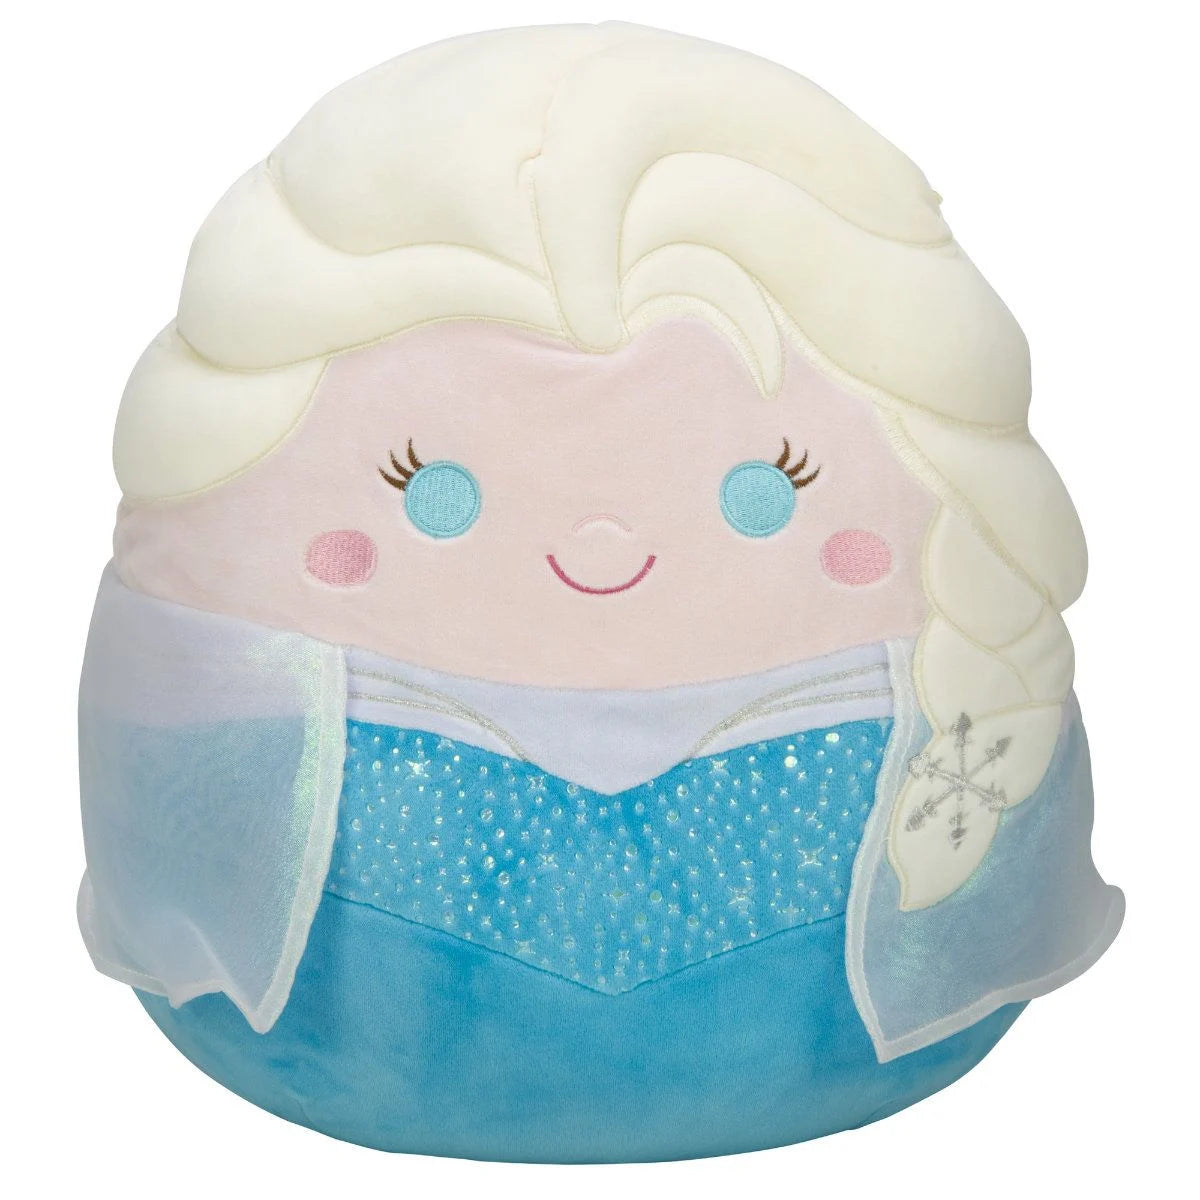 SQUISHMALLOWS 8" Disney Princess - Elsa Plush